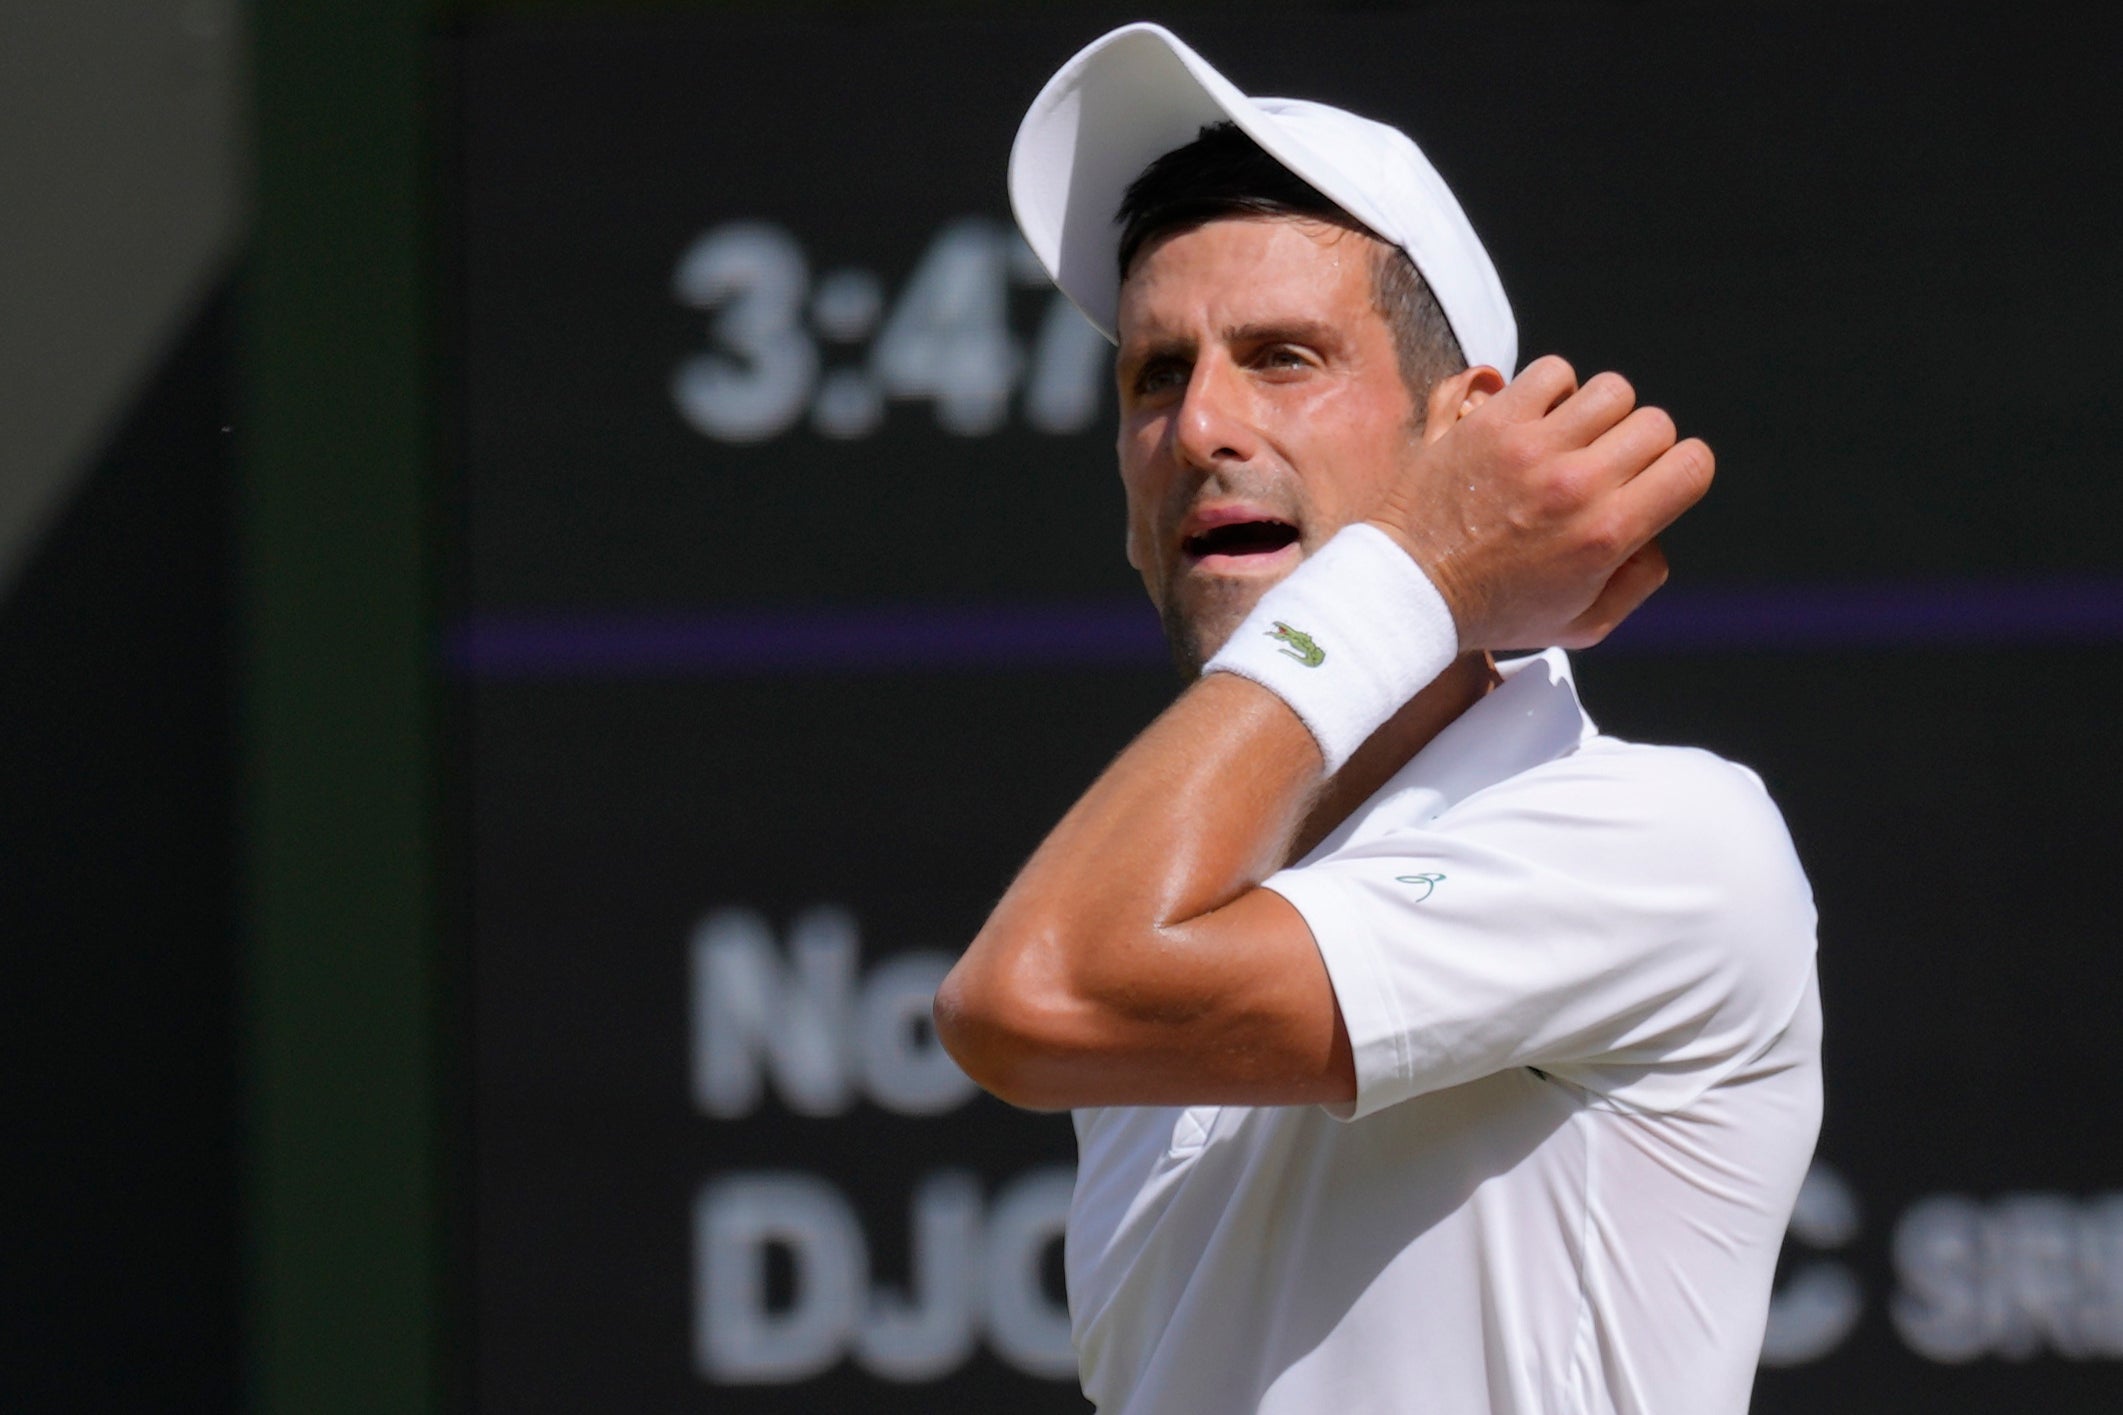 Serbia's Novak Djokovic wipes his face